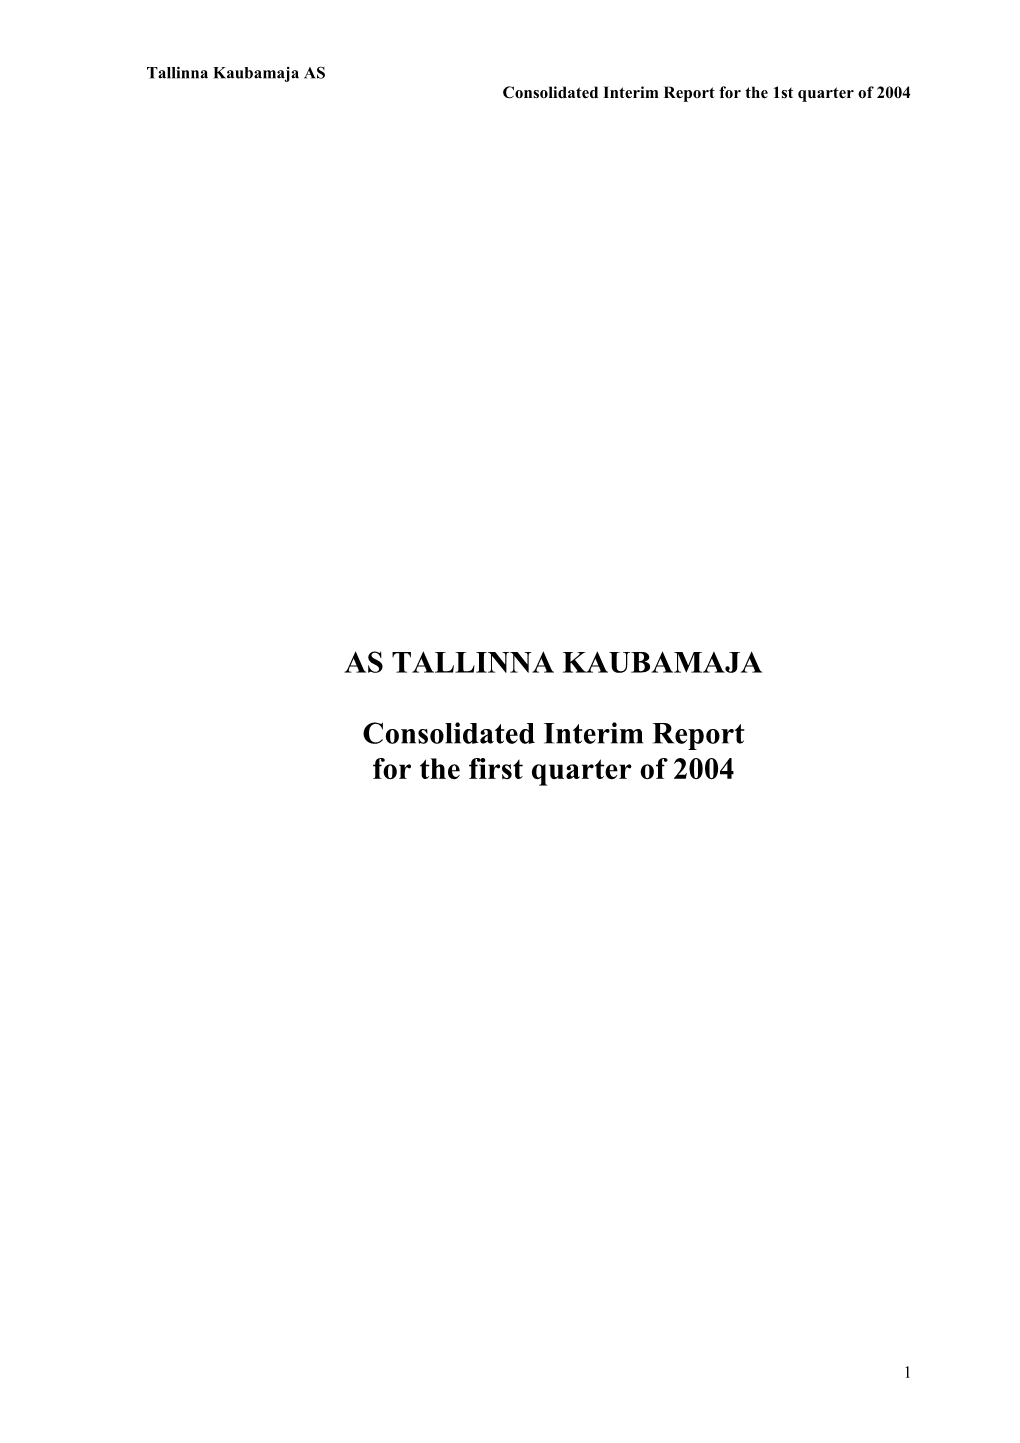 AS TALLINNA KAUBAMAJA Consolidated Interim Report for the First Quarter of 2004